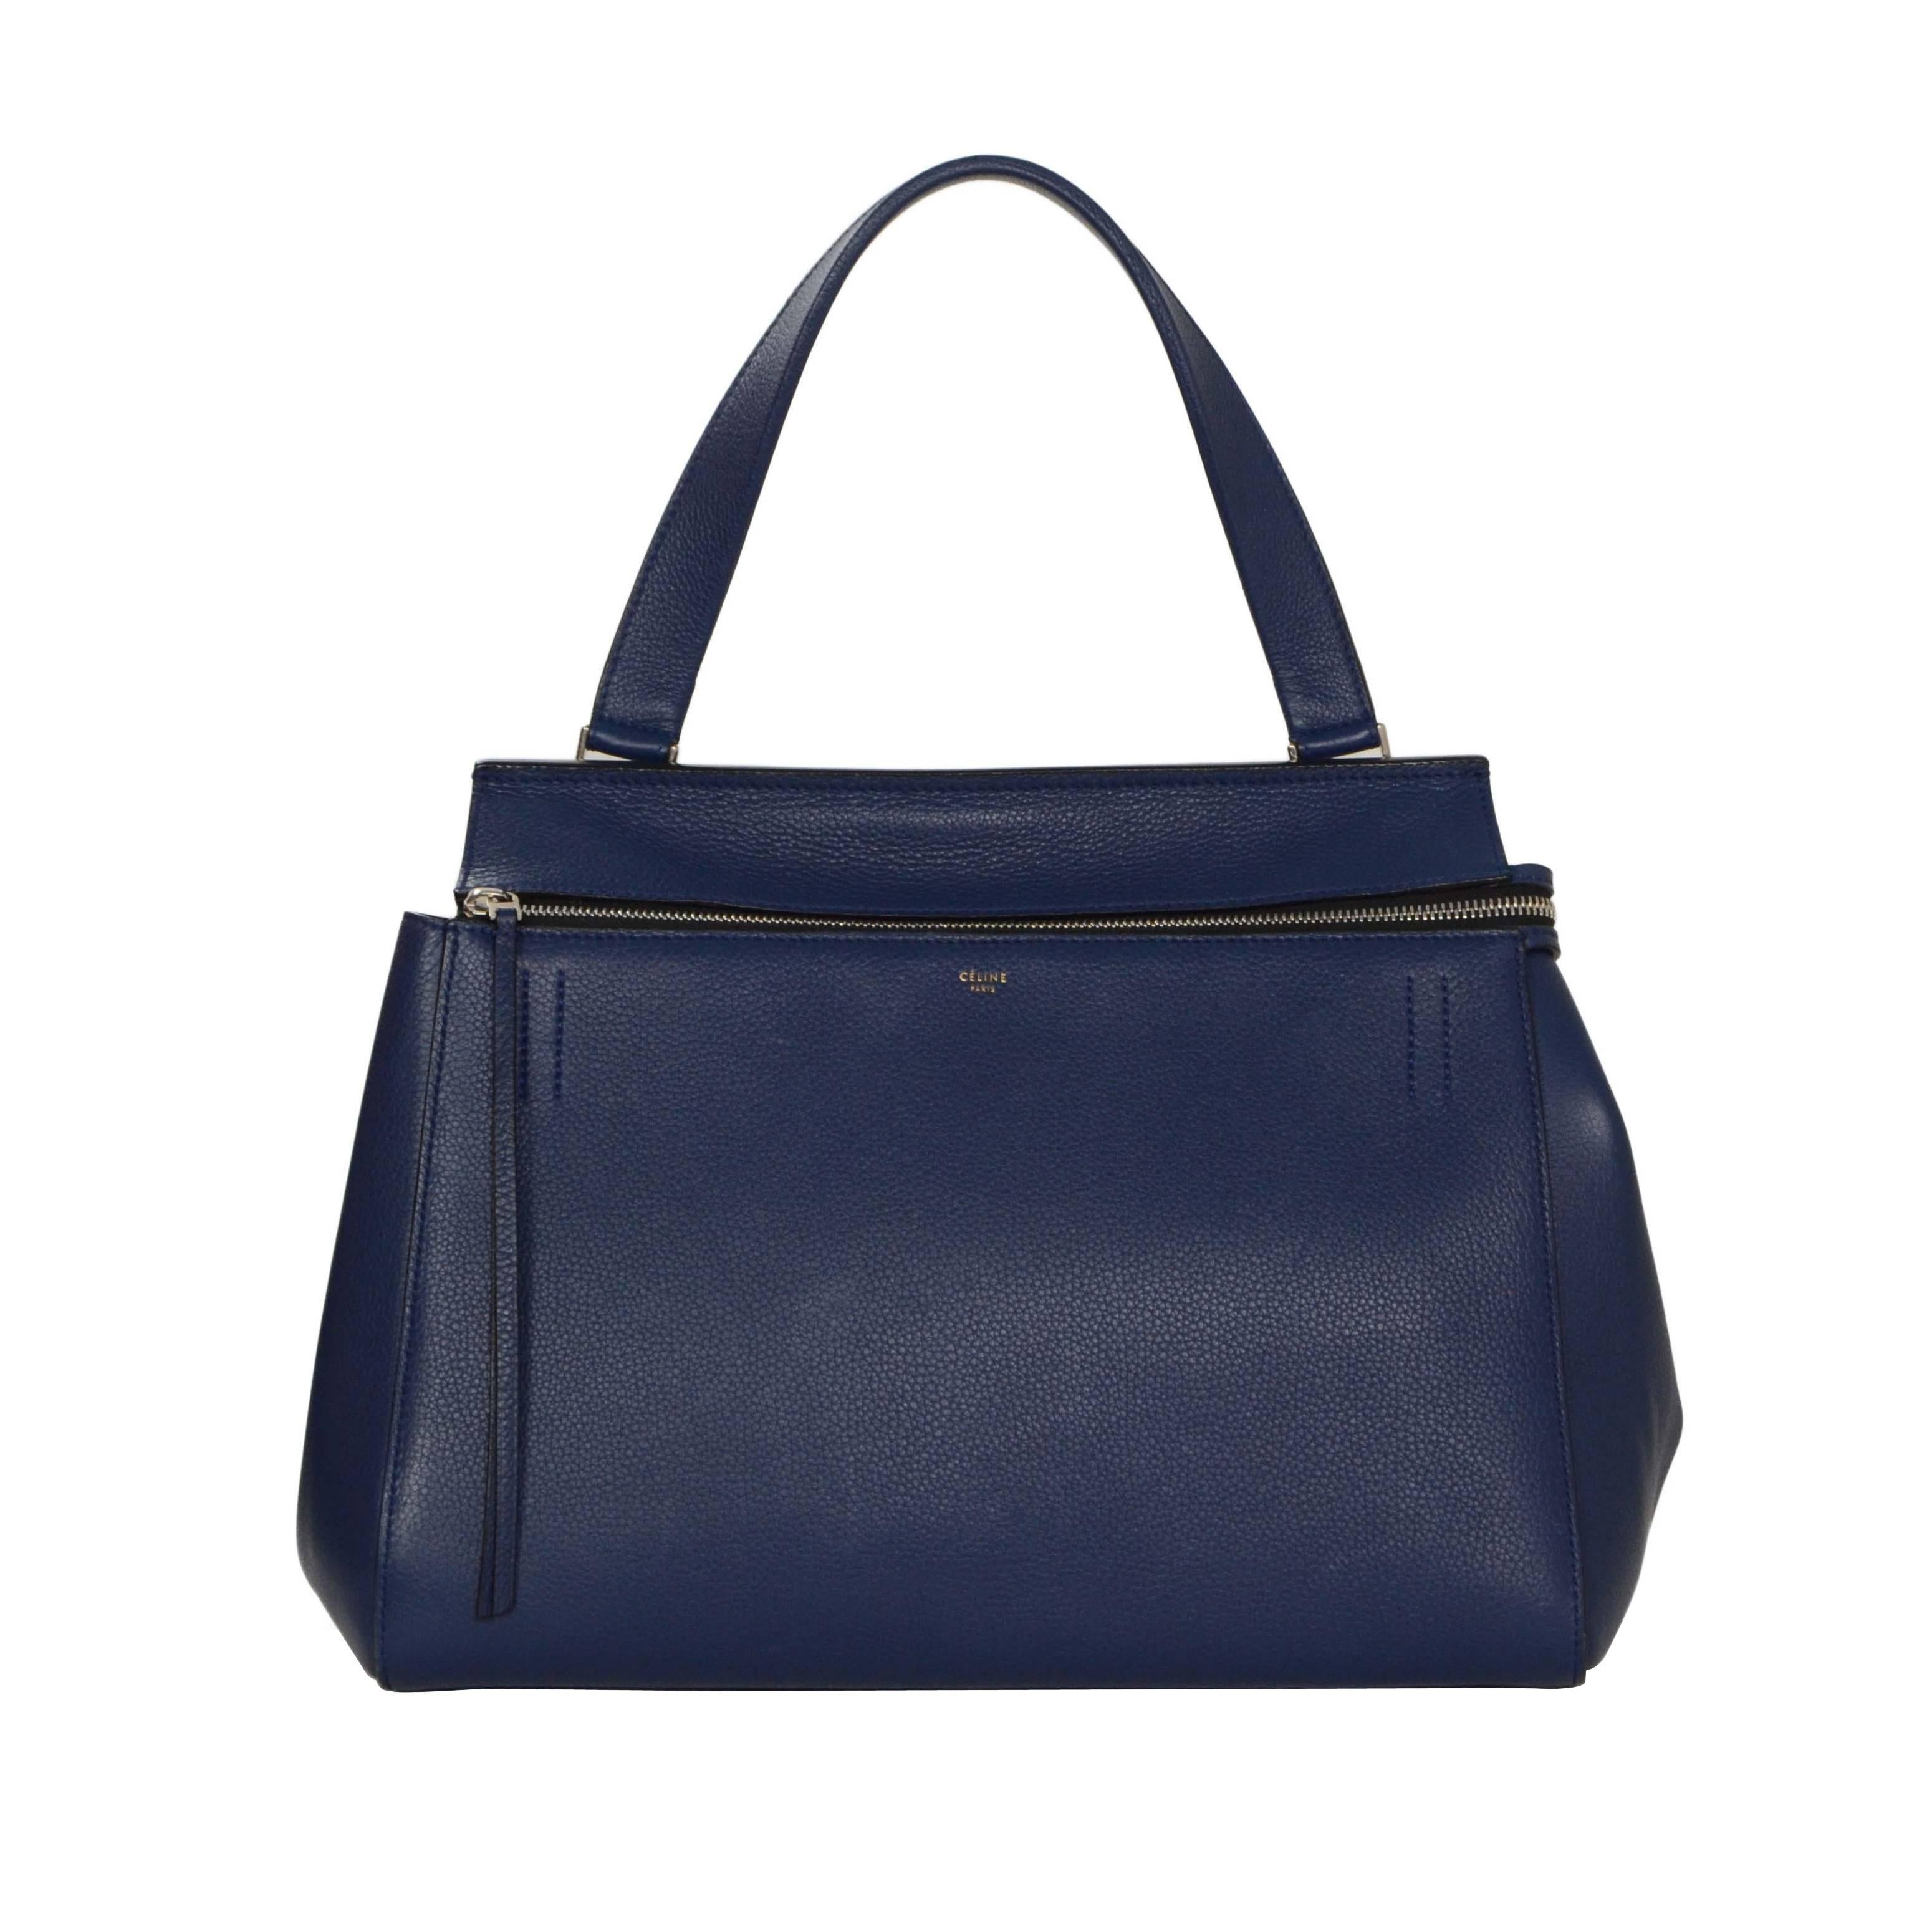 Celine Blue Leather Medium Edge Tote Bag SHW rt. $2, 600